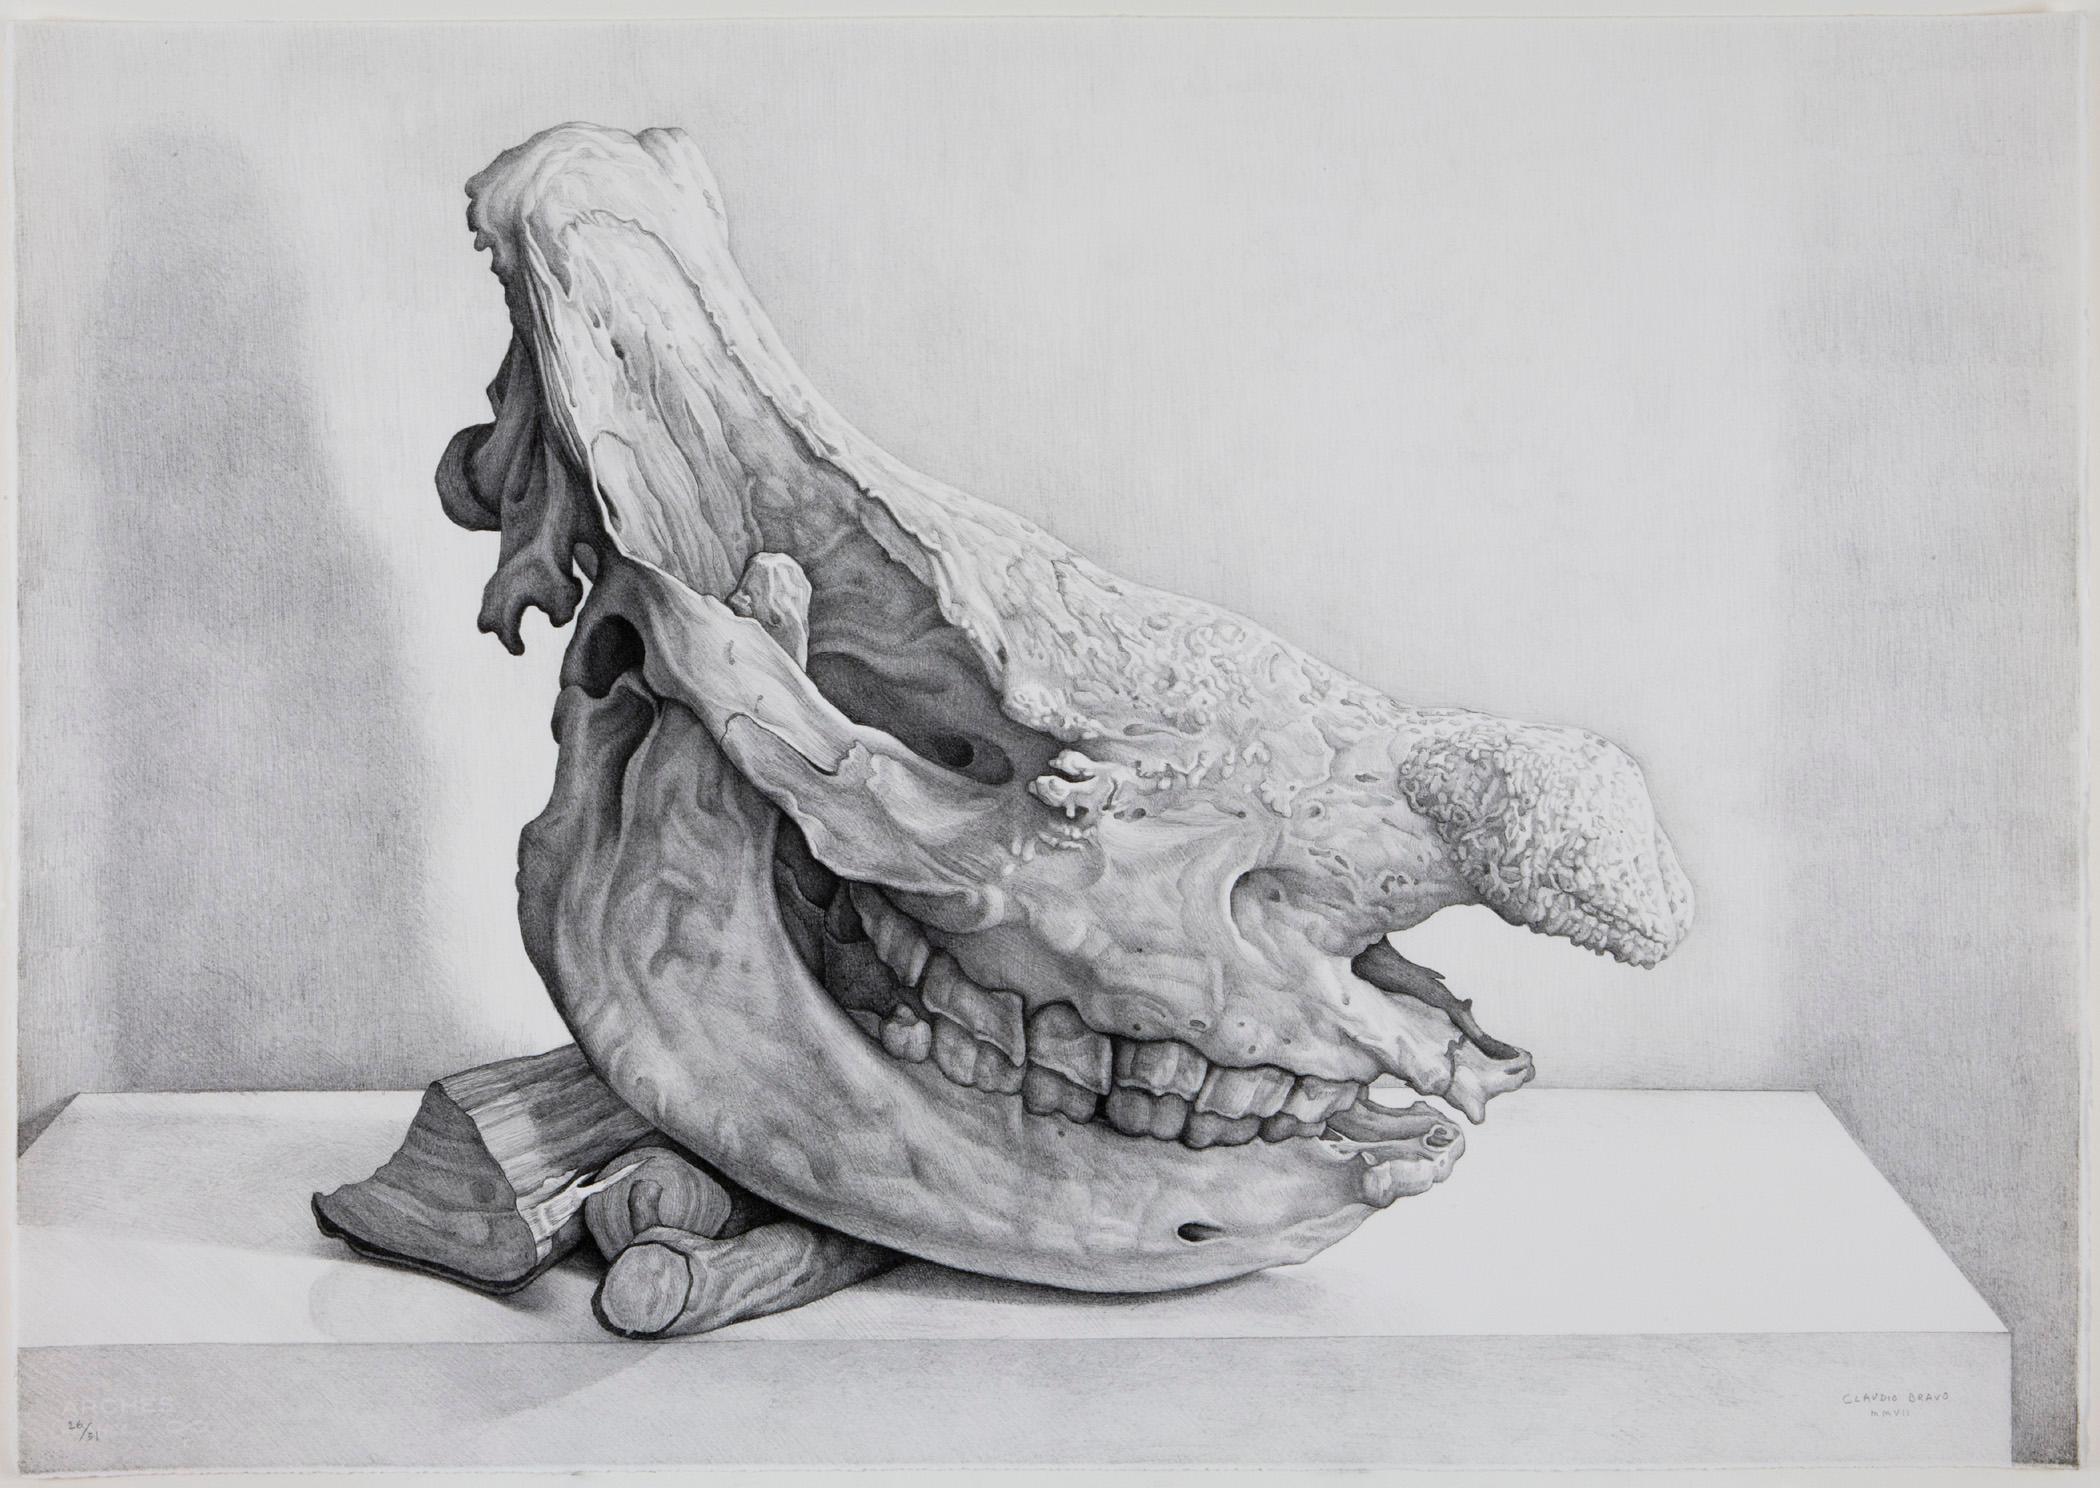 Claudio Bravo Animal Print - Craneo de rinoceronte (rhinoceros skull)